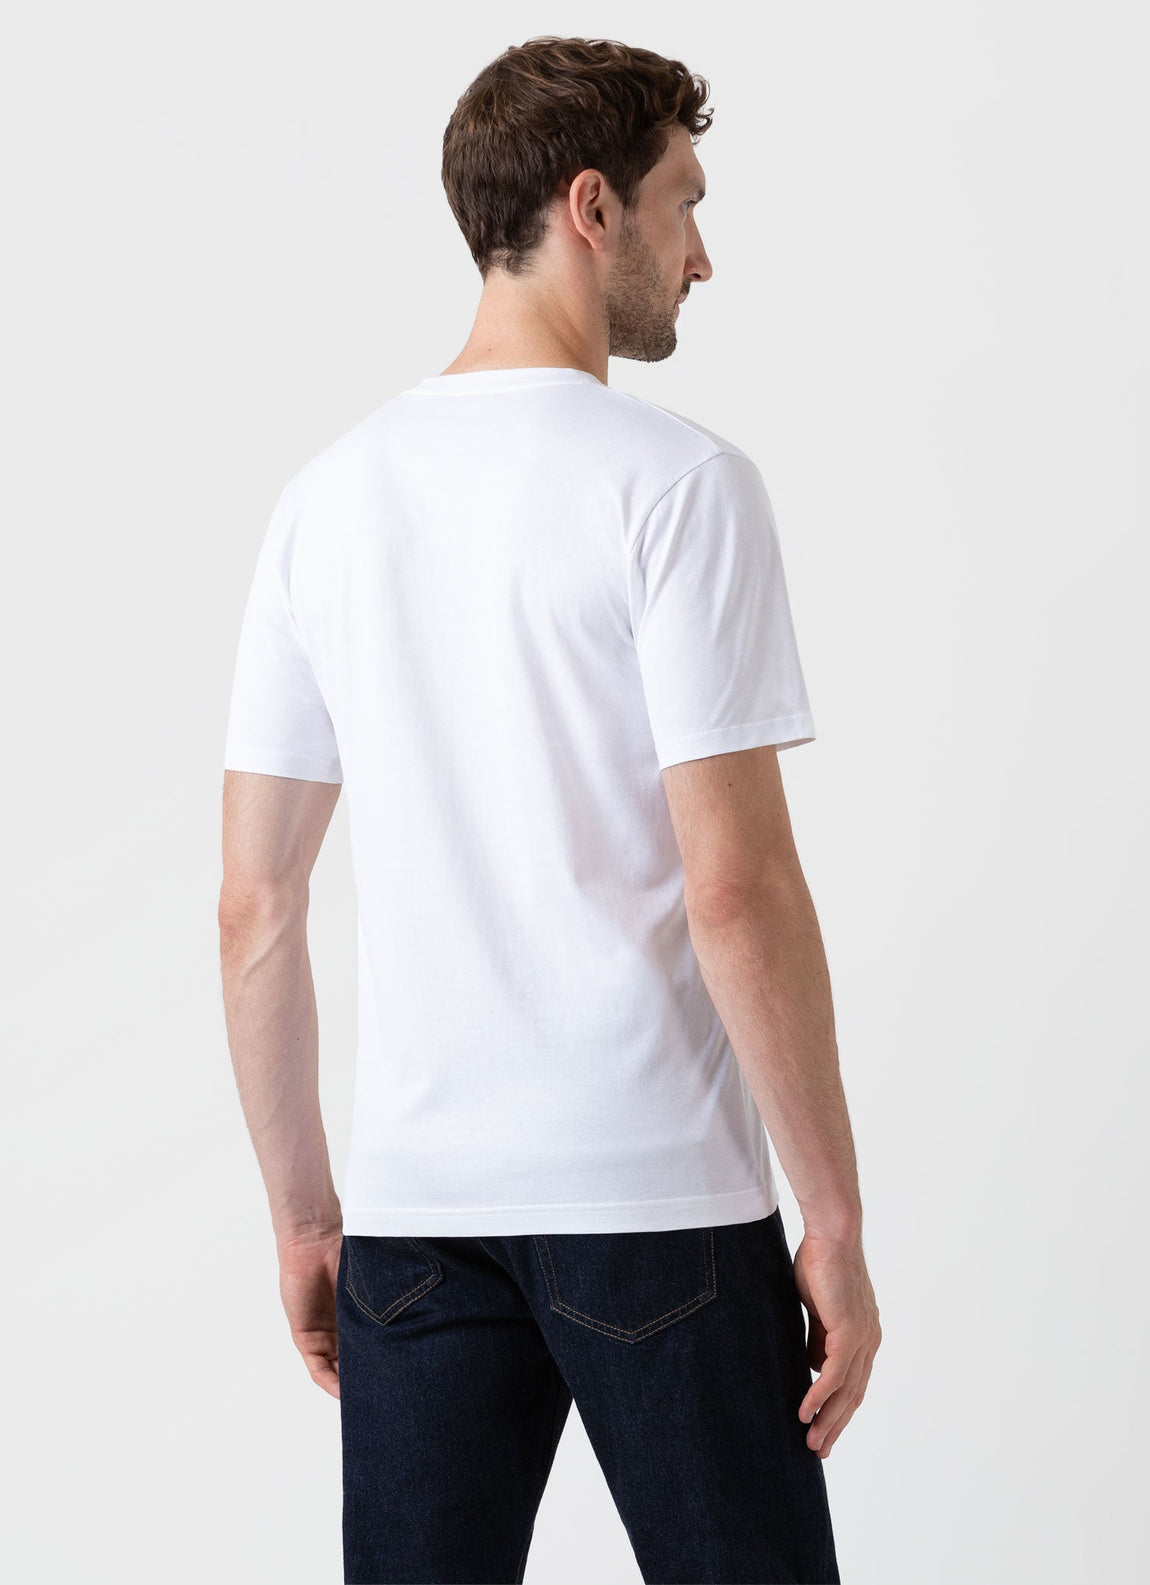 Men's Riviera Midweight V-neck T-shirt in White | Sunspel